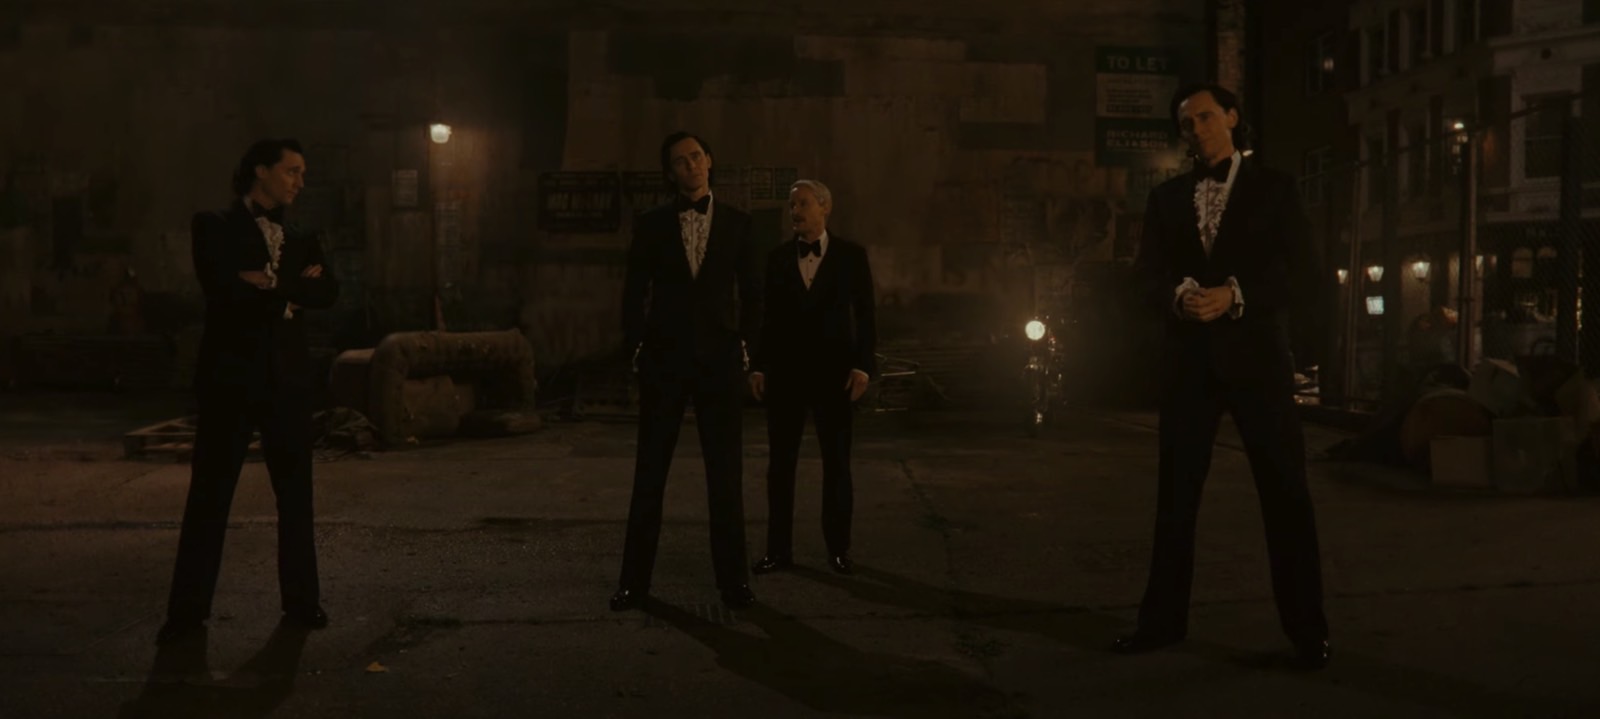 Three Loki (Tom Hiddleston) variants with Mobius (Owen Wilson) in Loki season 2 trailer 1.